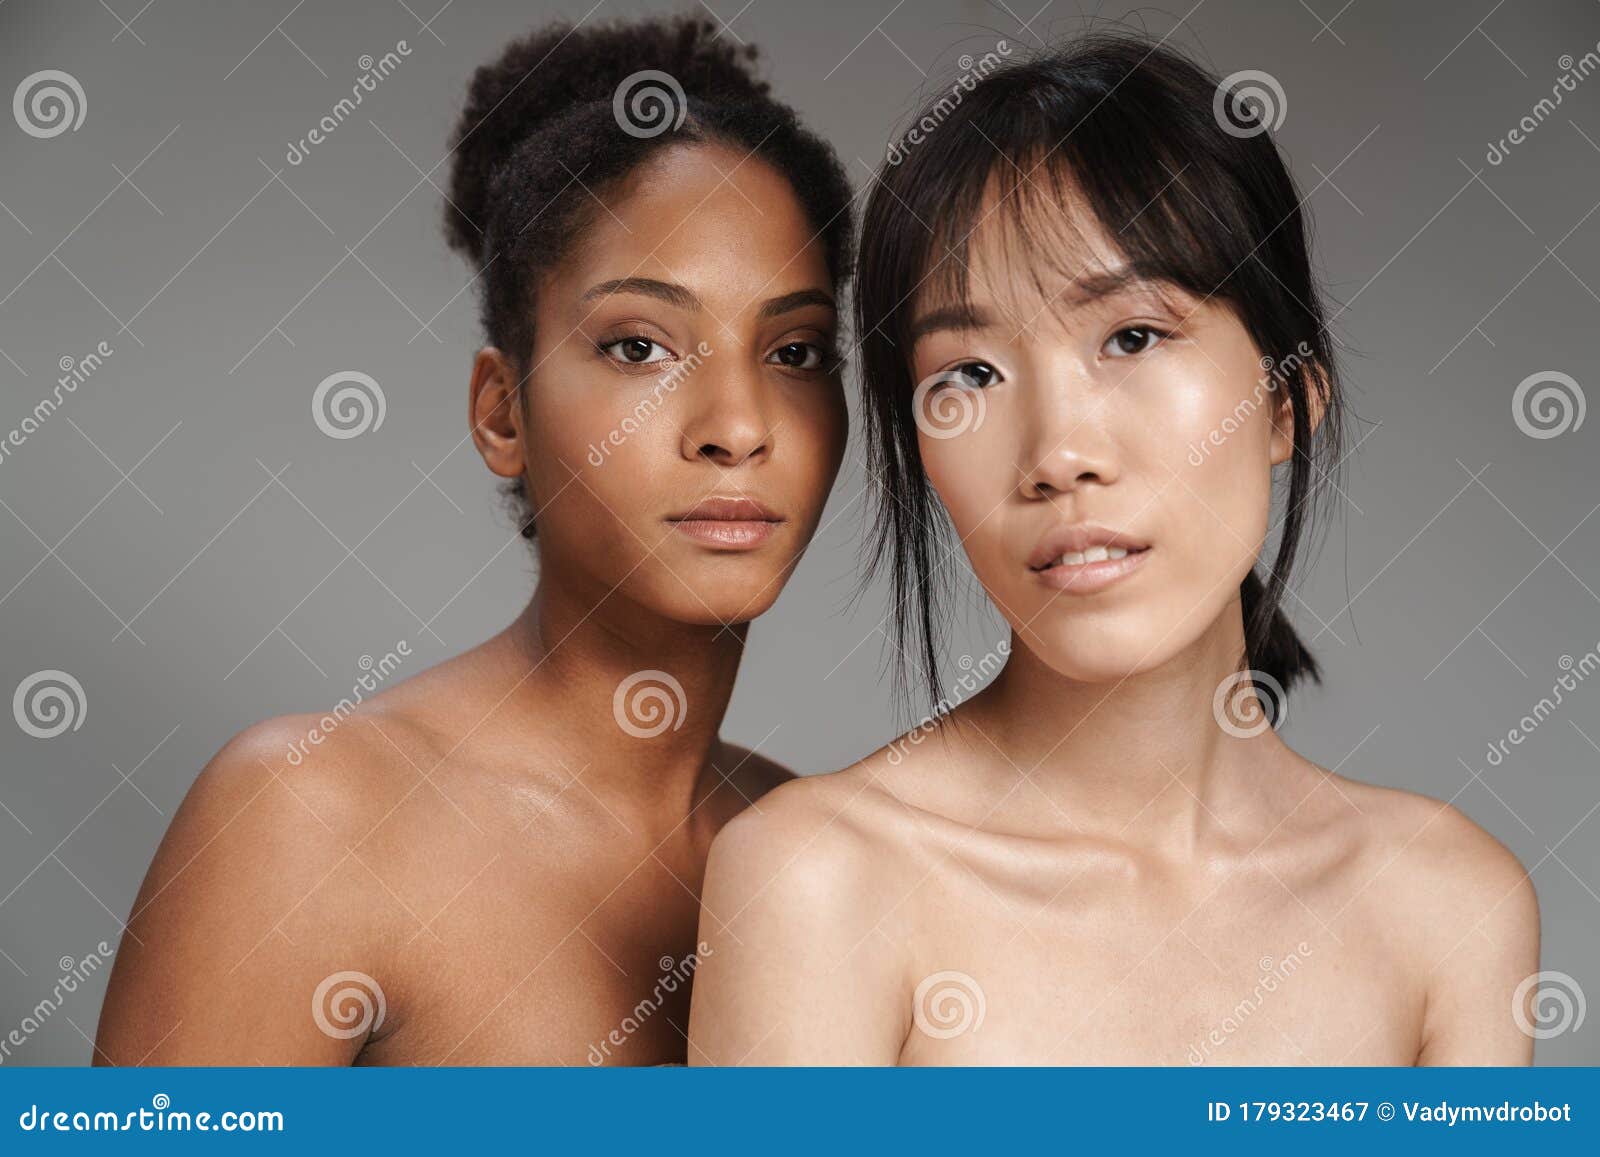 Girls Getting Naked Together